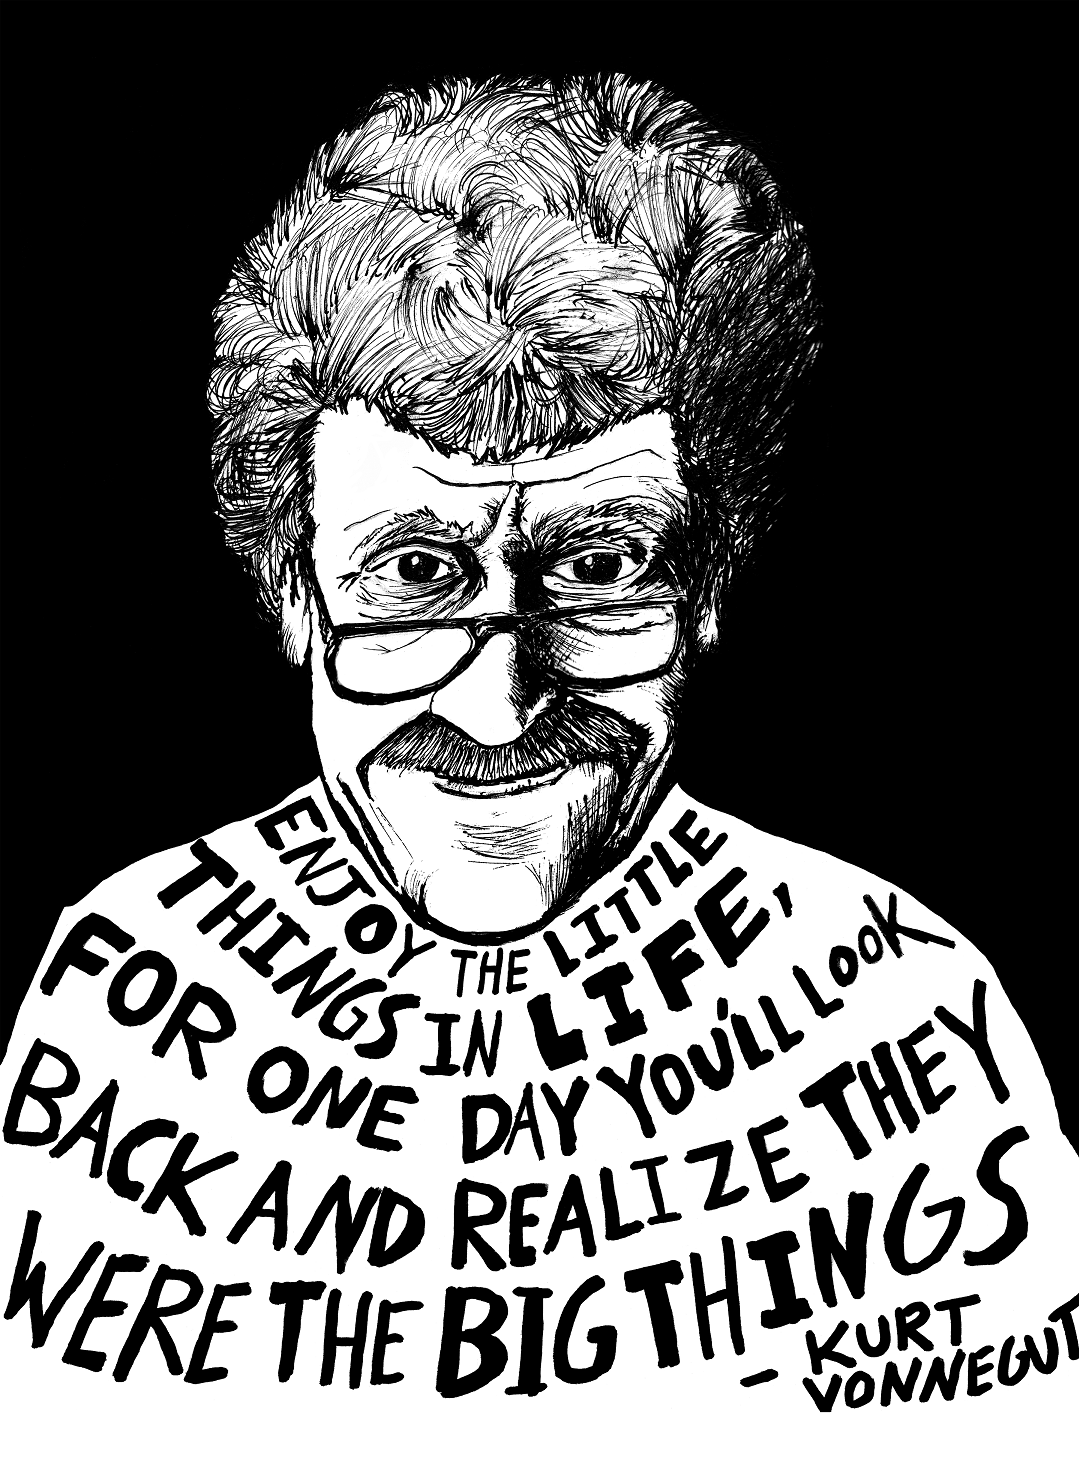 Kurt Vonnegut depicted in art by Ryan Sheffield